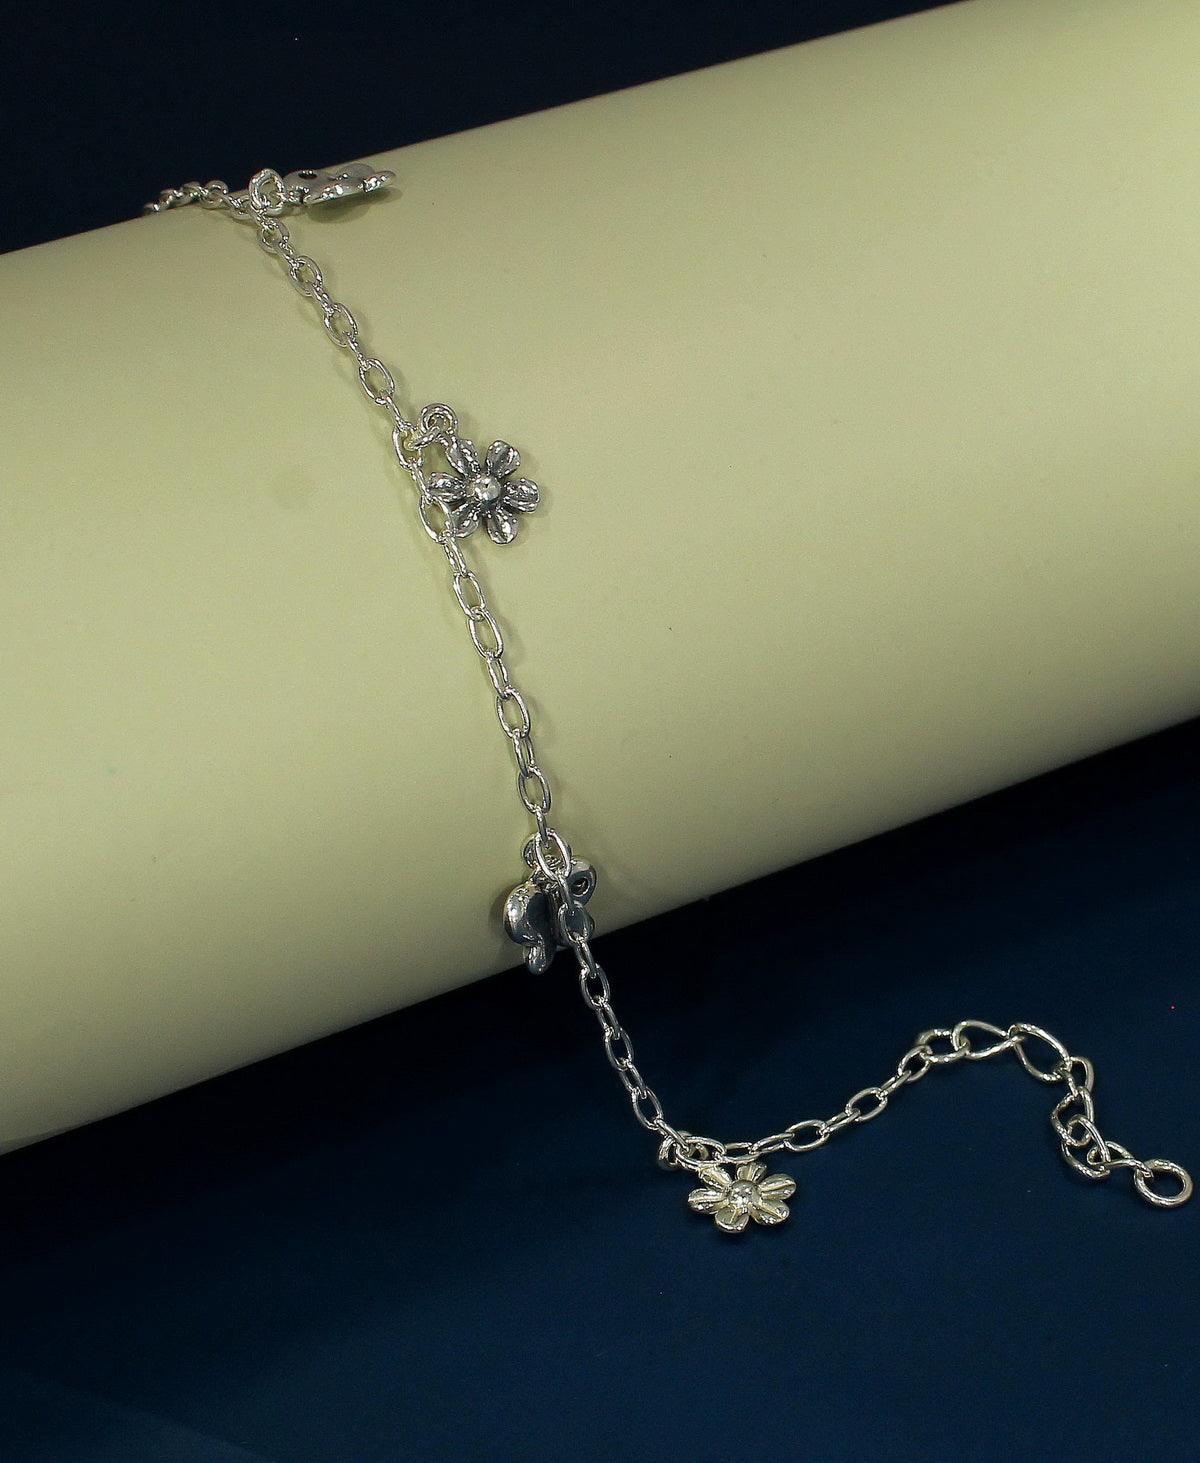 Flower Charms Stone Studded Silver Bracelet - Chandrani Pearls